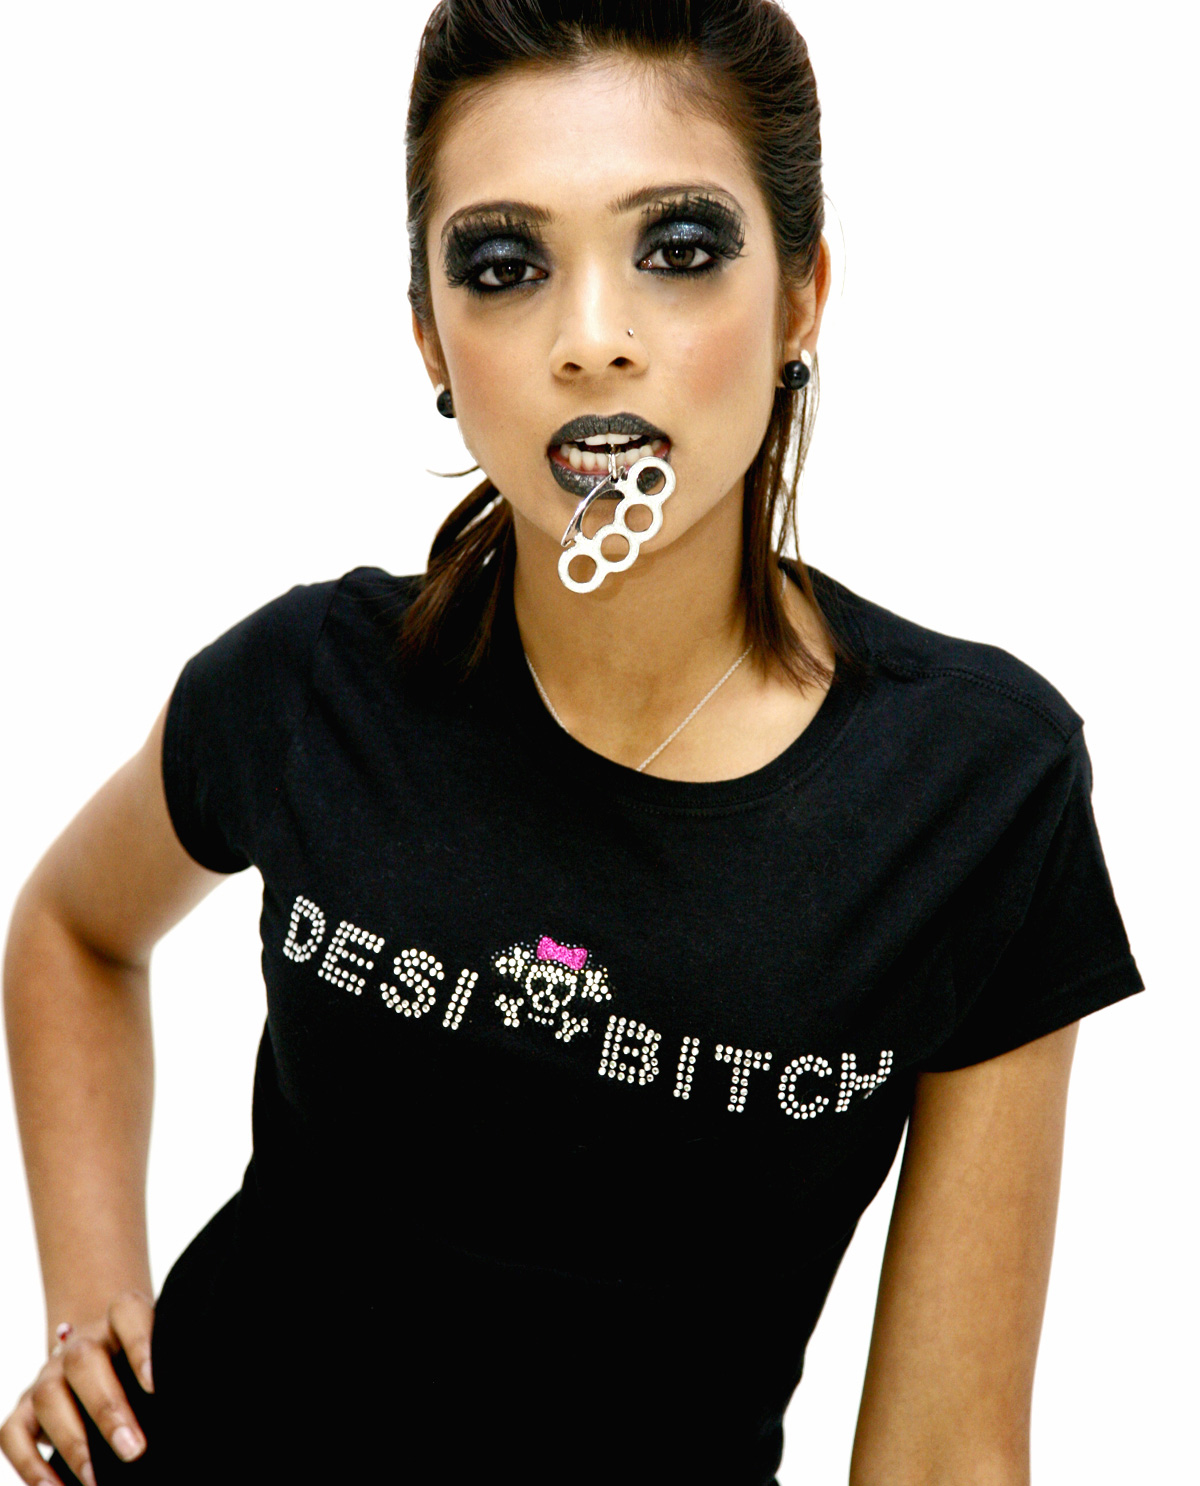 South Asian female wearing Desi Bitch rhinestone shirt.